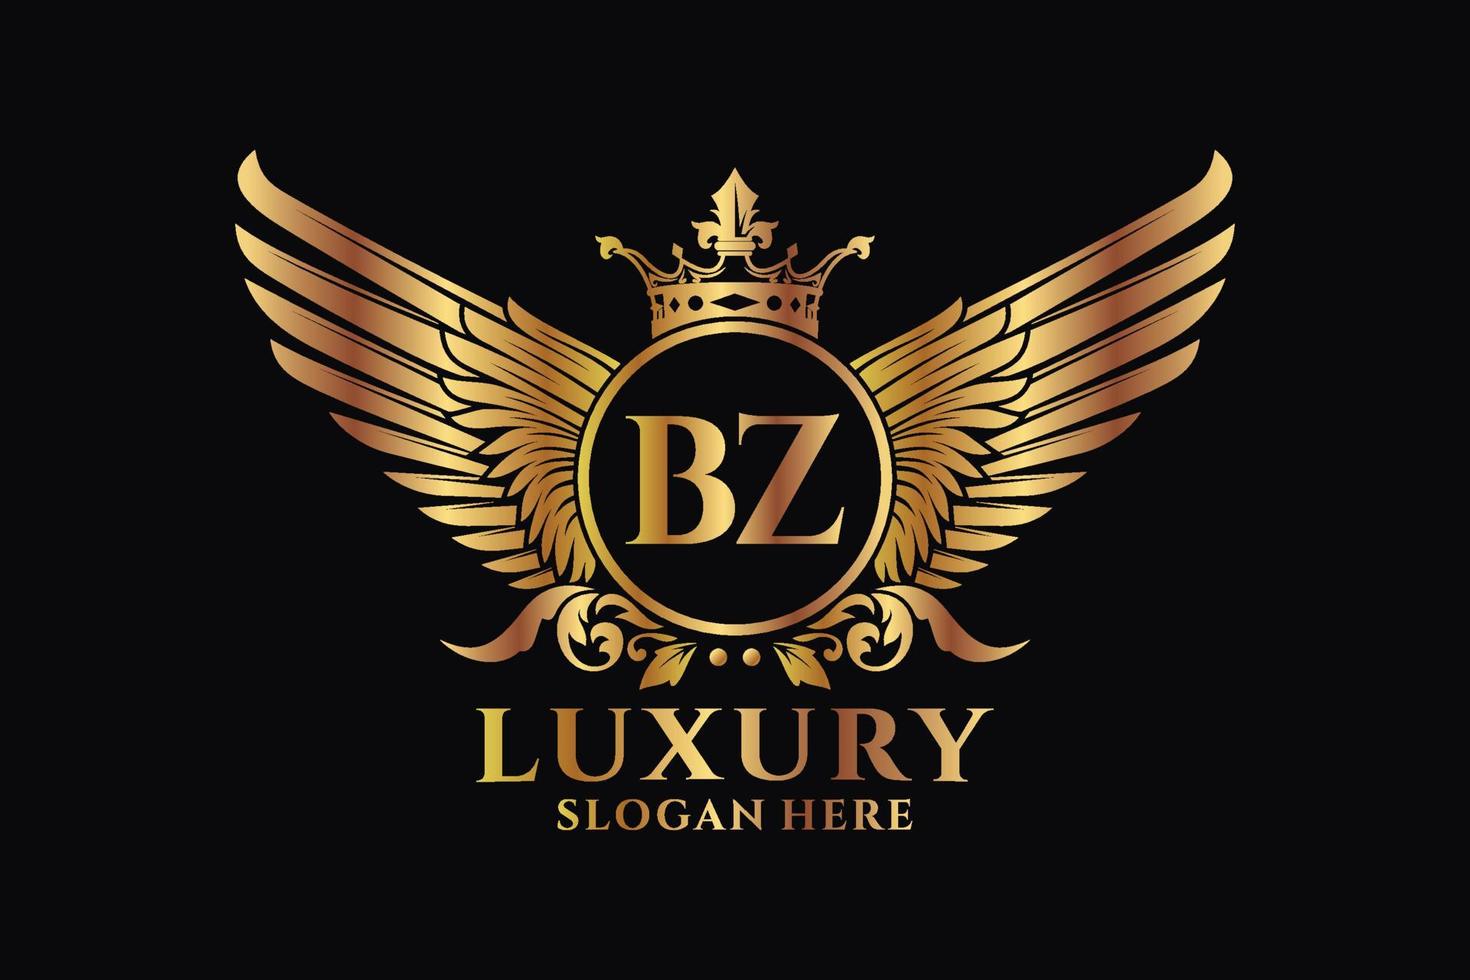 luxe Koninklijk vleugel brief bz kam goud kleur logo vector, zege logo, kam logo, vleugel logo, vector logo sjabloon.